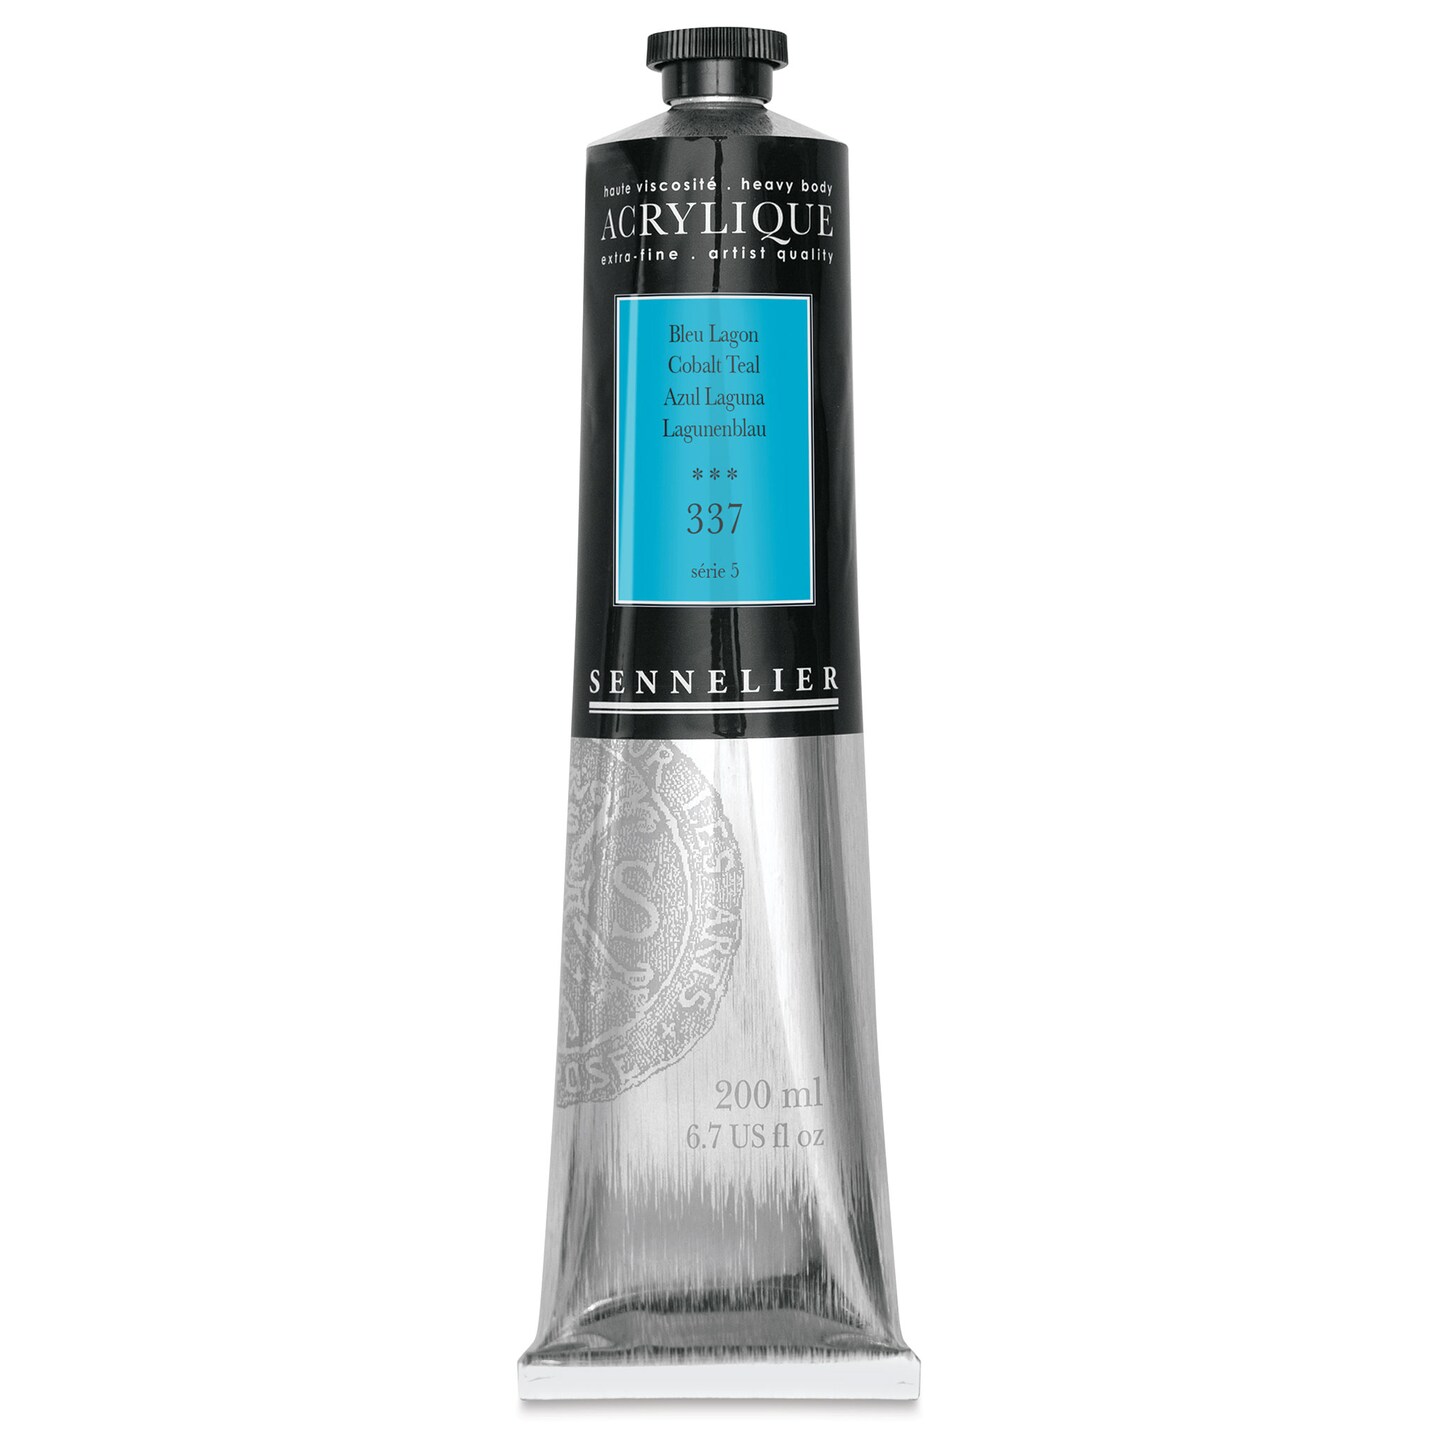 Sennelier Extra-Fine Artist Acryliques - Cobalt Teal, 200 ml tube